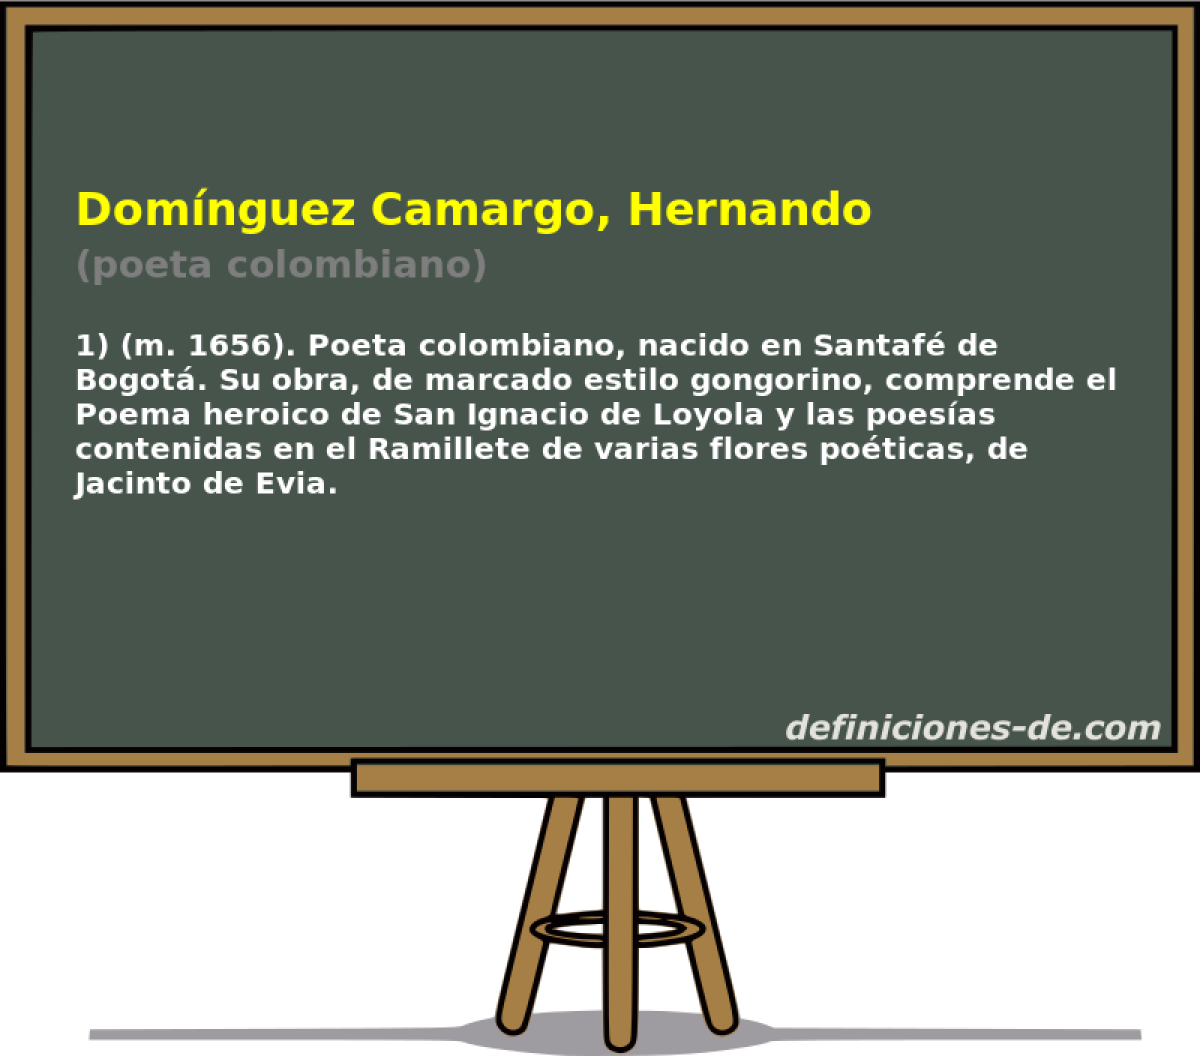 Domnguez Camargo, Hernando (poeta colombiano)